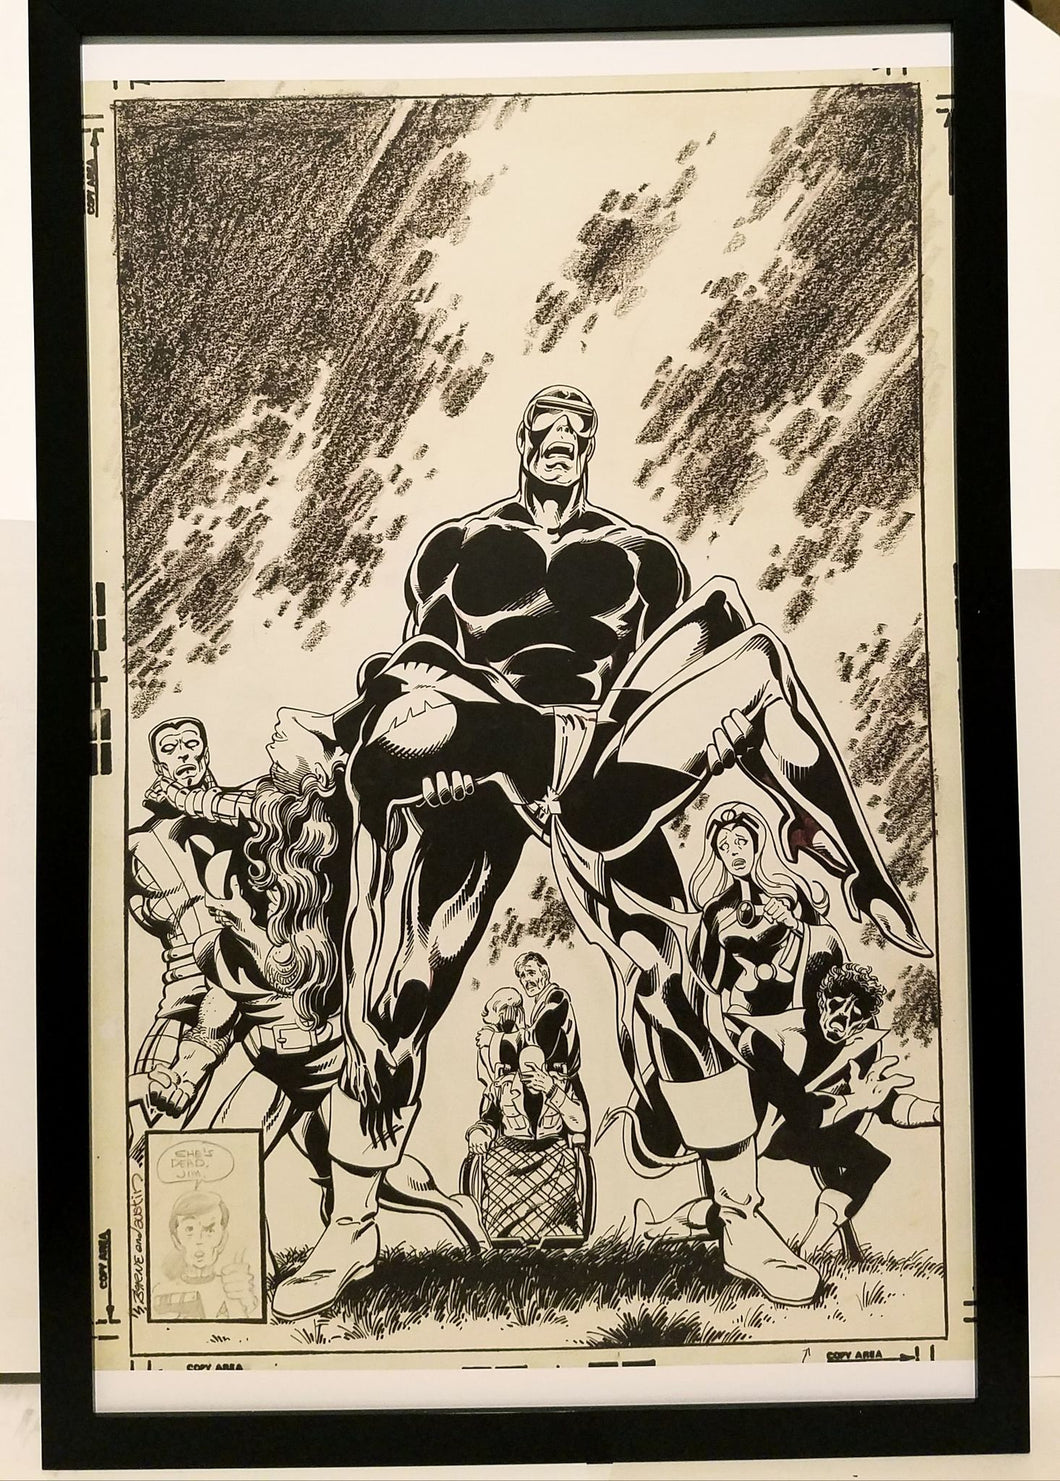 Uncanny X-Men #136 by John Byrne 11x17 FRAMED Original Art Poster Marvel Comics